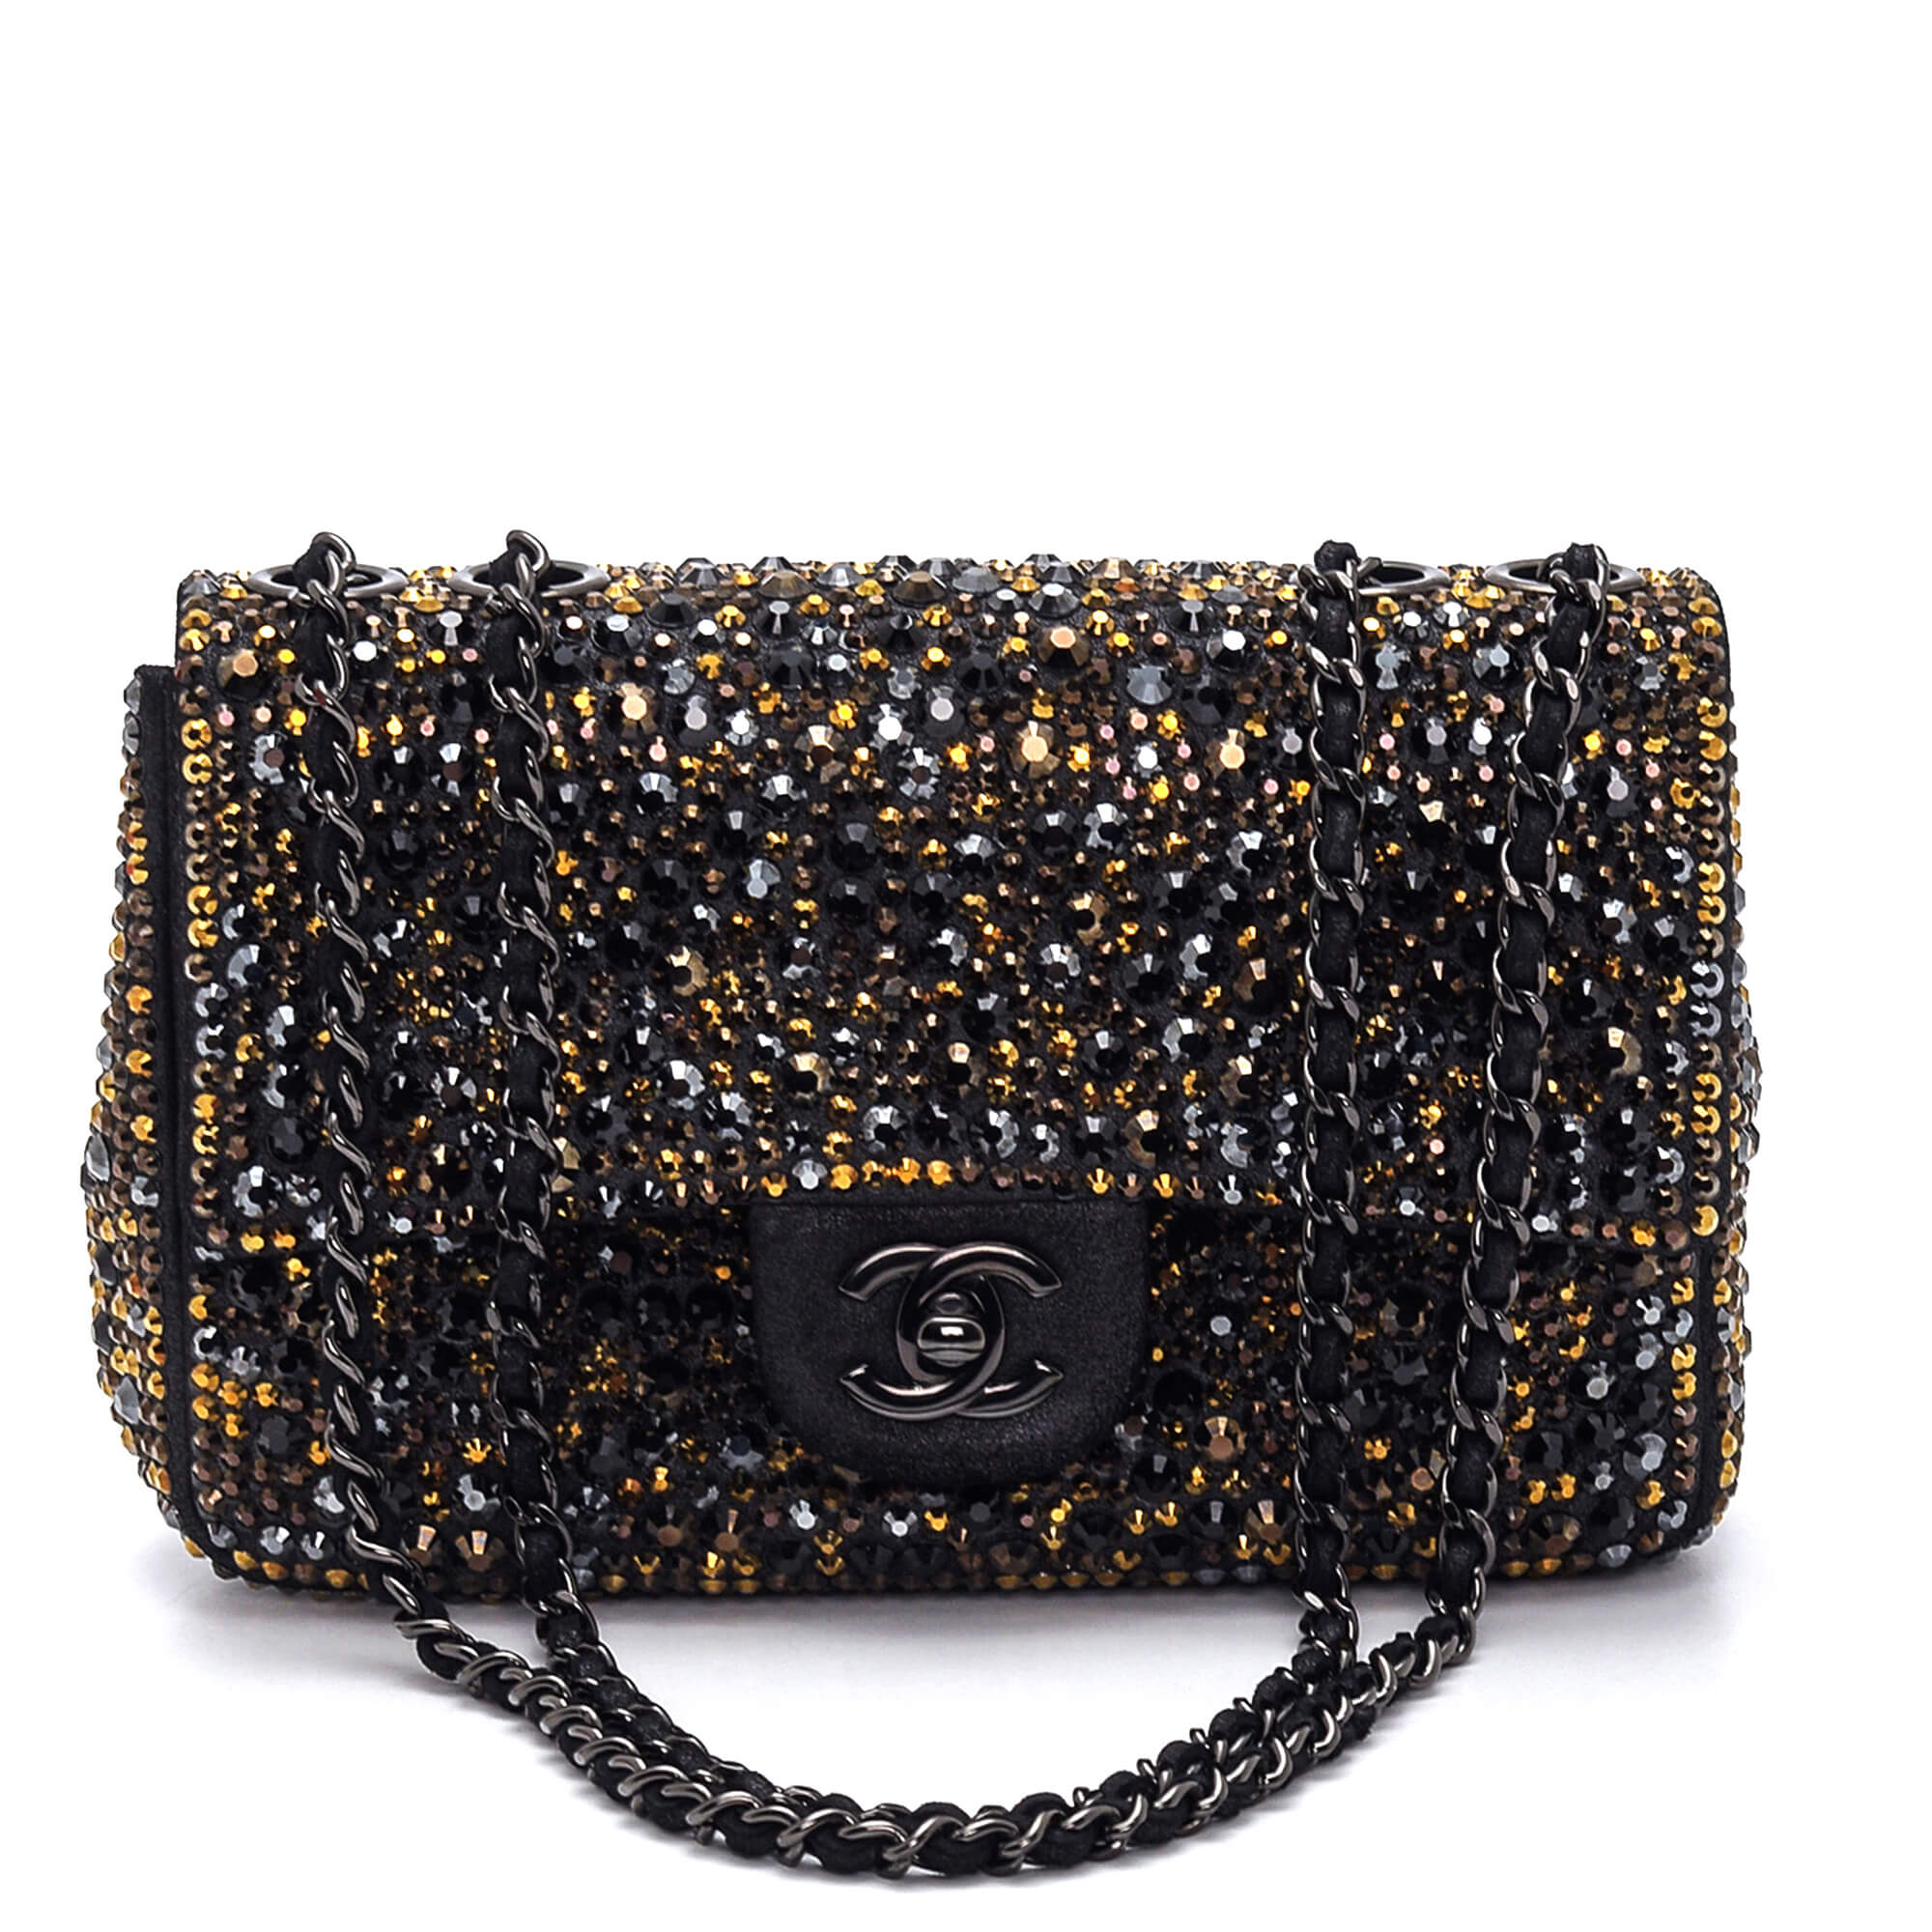 Chanel - Black / Gold Swarovski Strass Goatskin Leather CC Flap Bag 